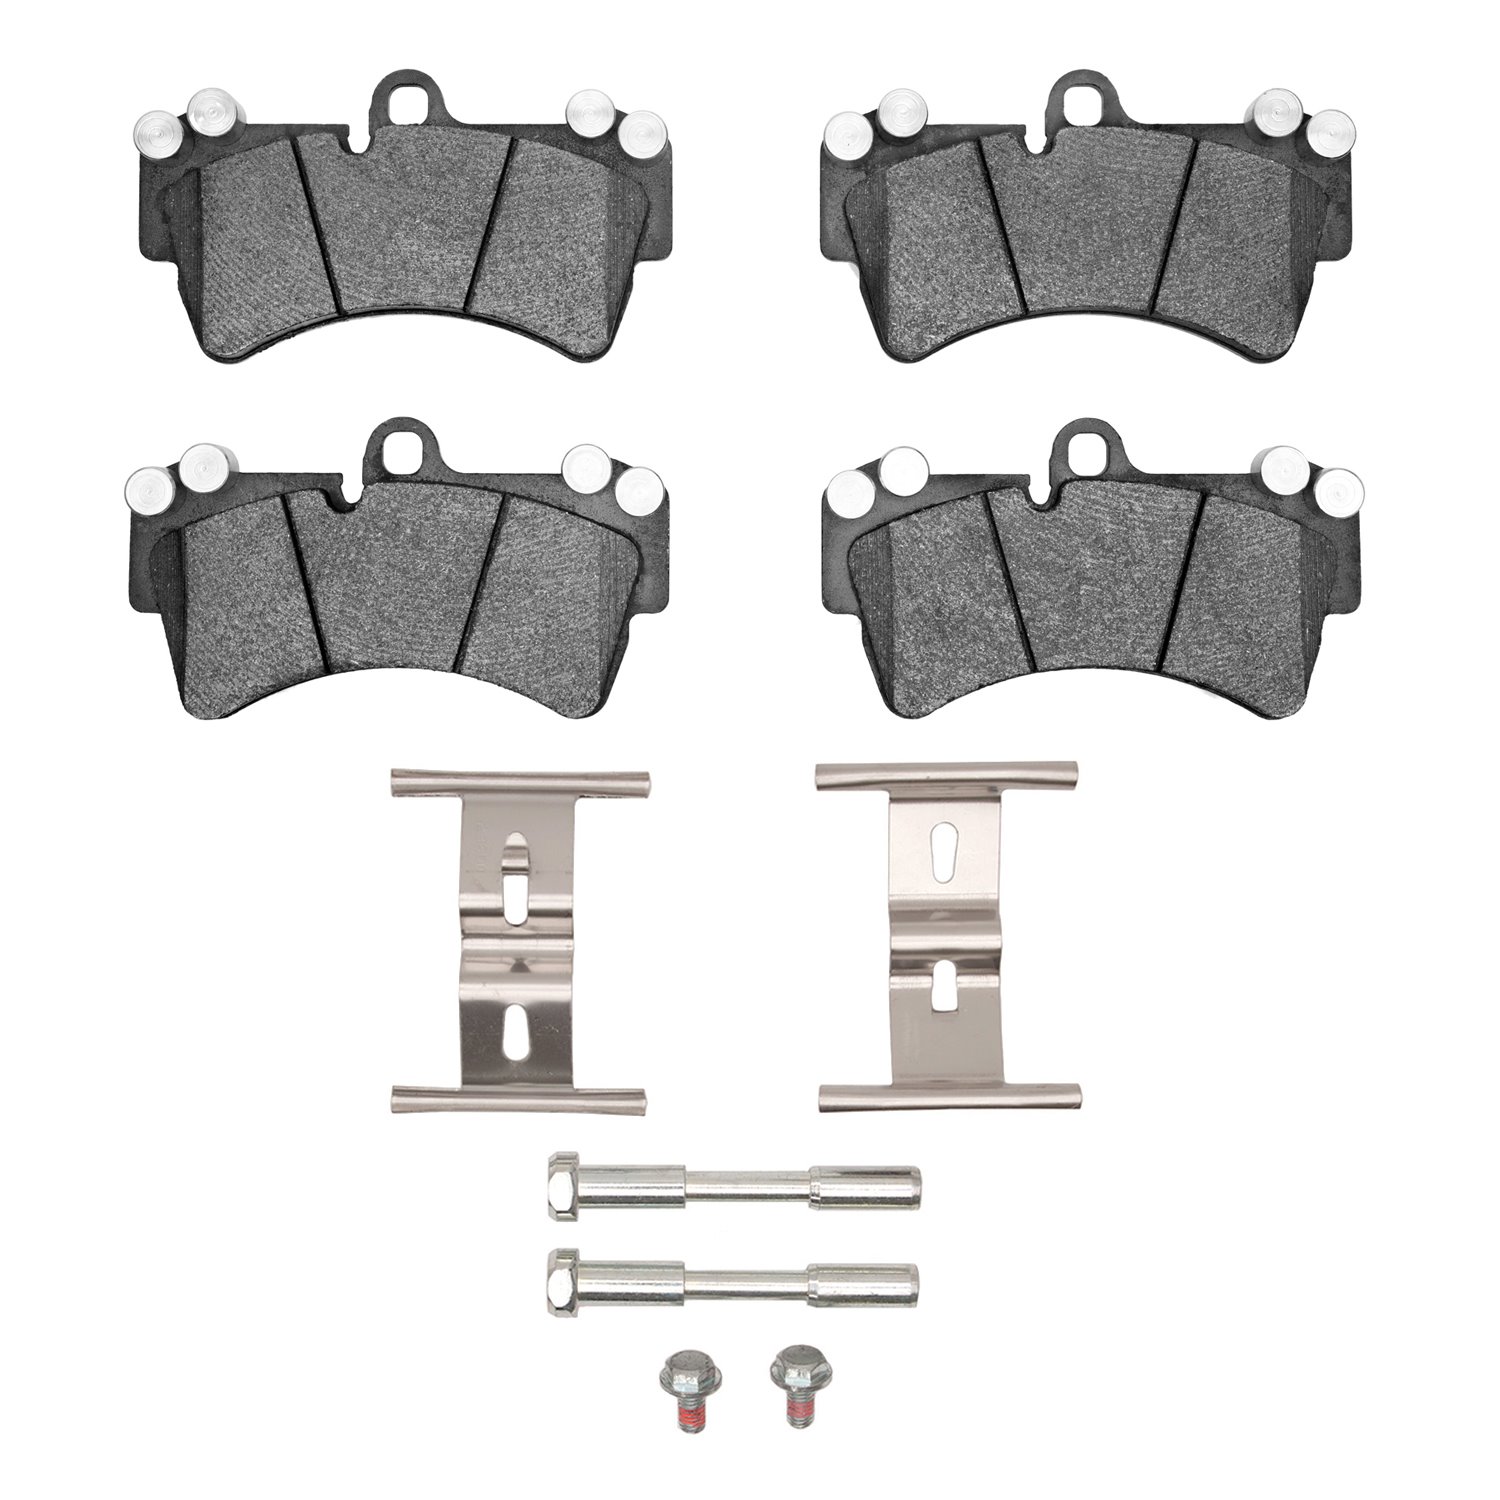 1600-0977-01 5000 Euro Ceramic Brake Pads & Hardware Kit, 2003-2015 Multiple Makes/Models, Position: Front